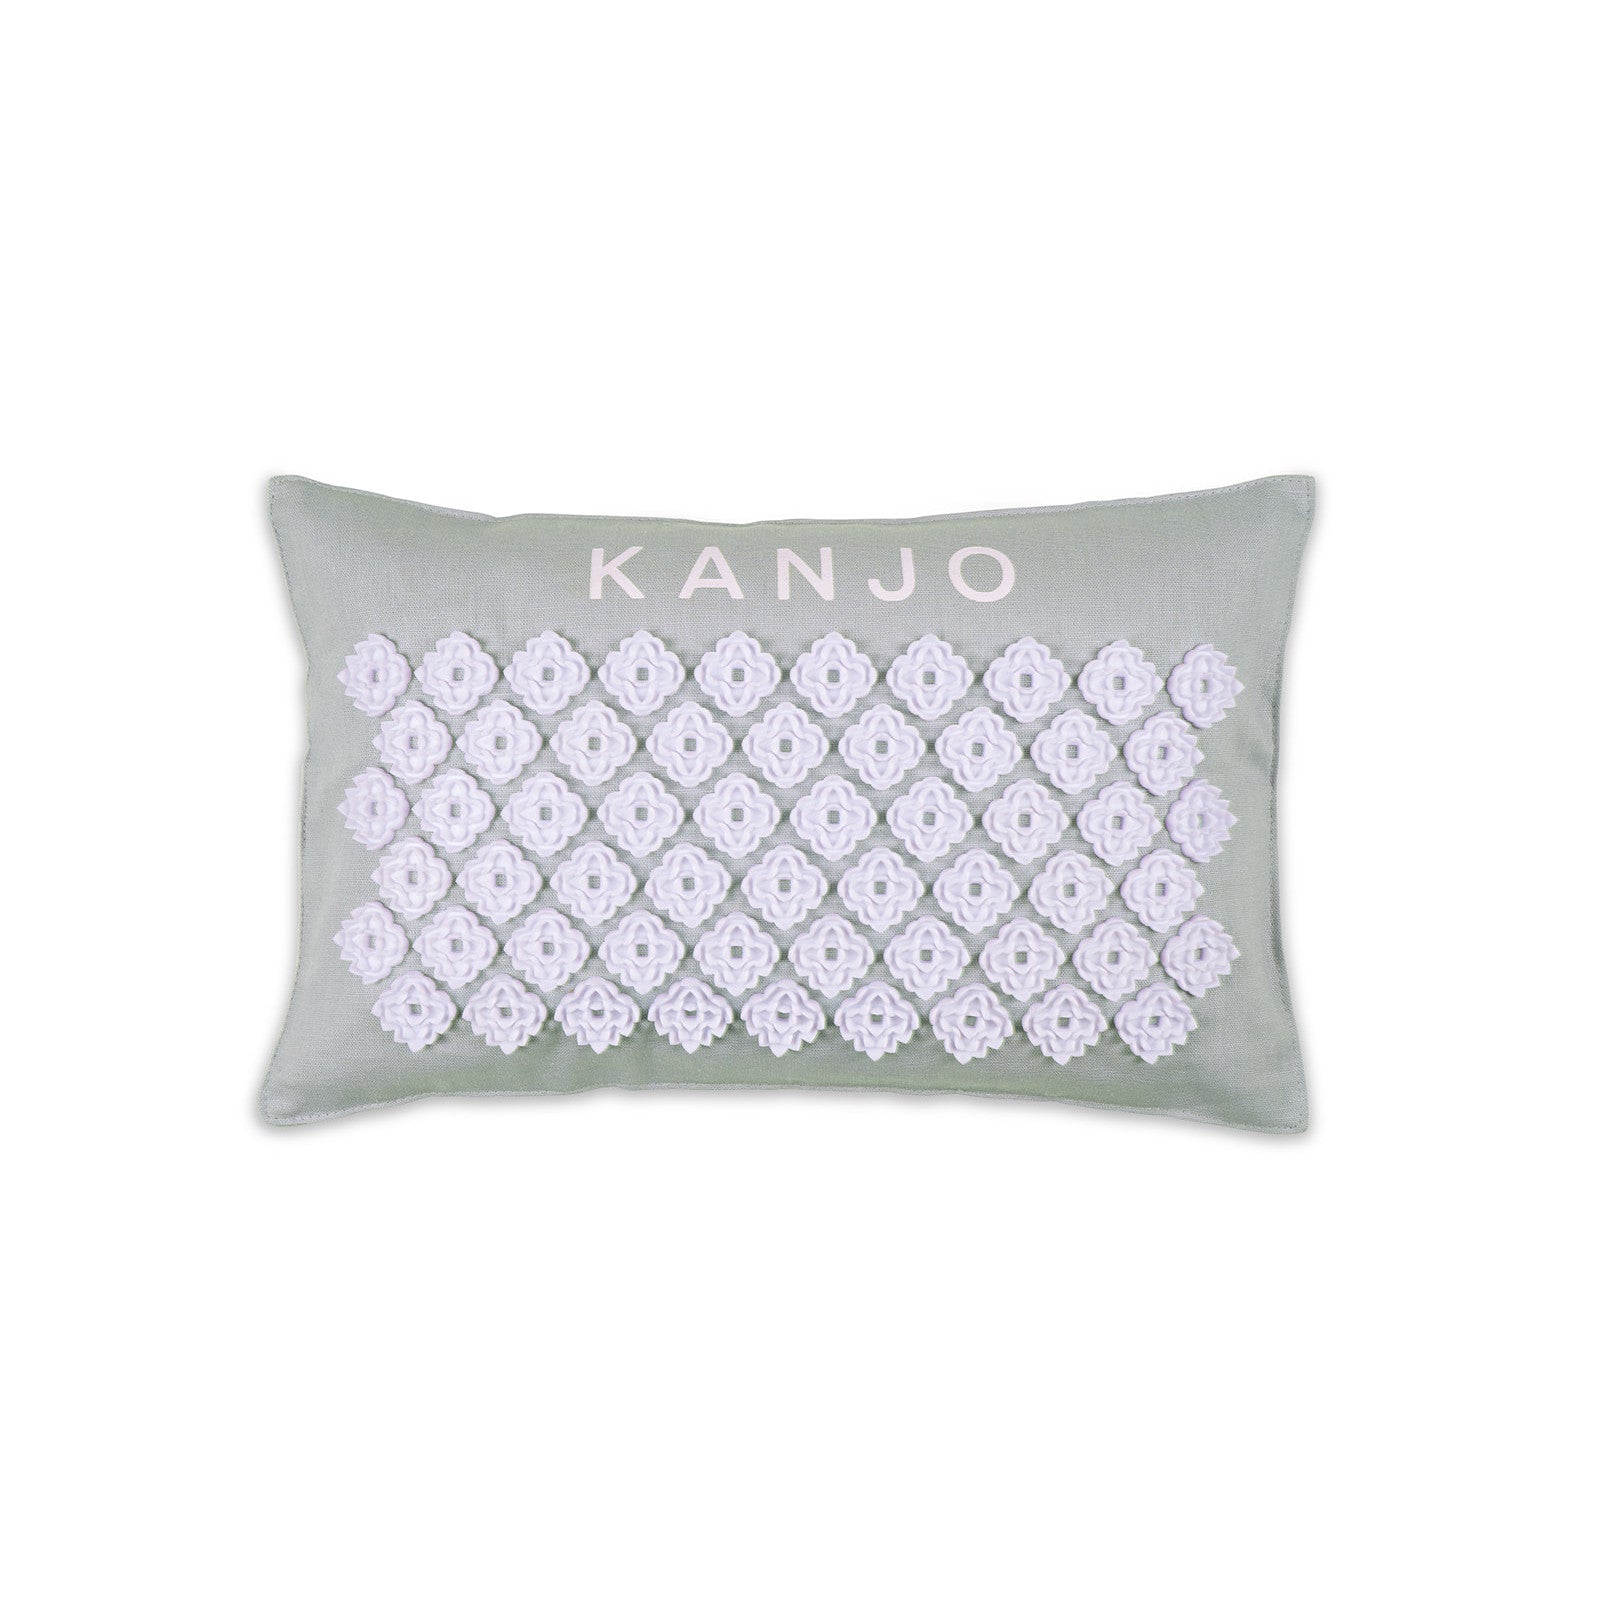 Kanjo Aroma Mint Acupressure Pillow